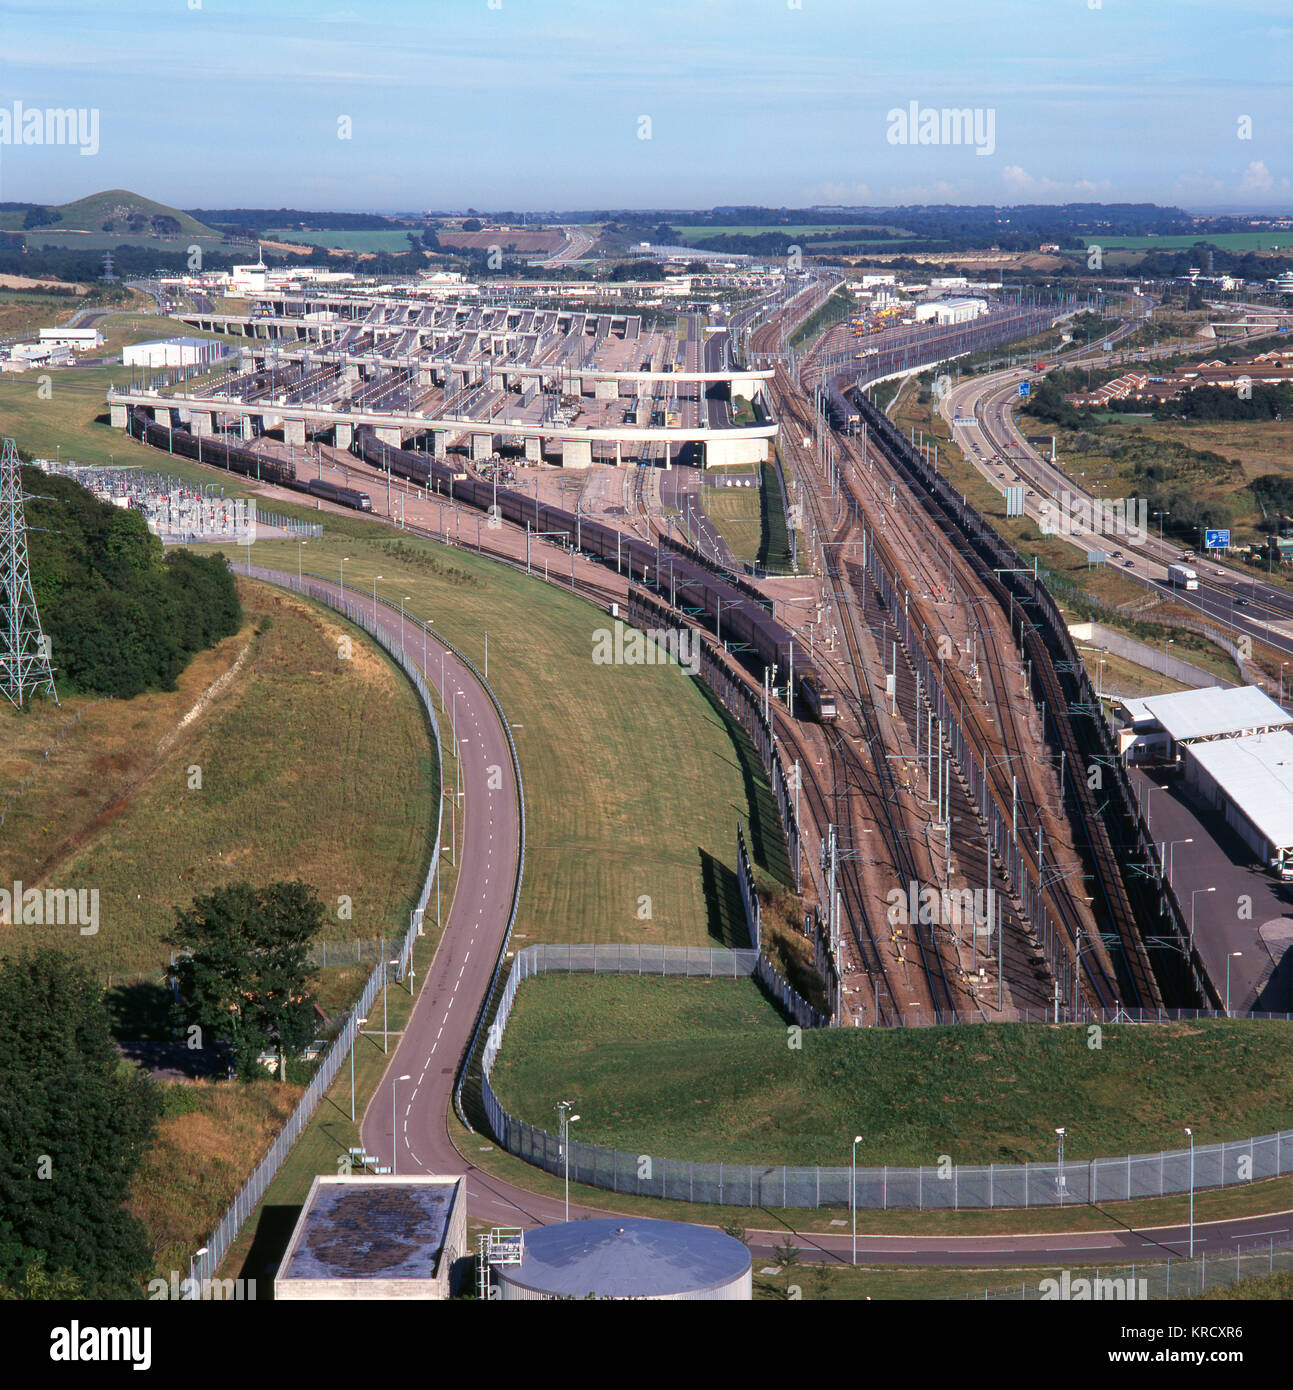 La terminal del Eurotúnel en Folkestone, Kent, Inglaterra - vista desde arriba de la entrada al túnel, mostrando un tren Eurostar de salir. Fecha: 1997 Foto de stock